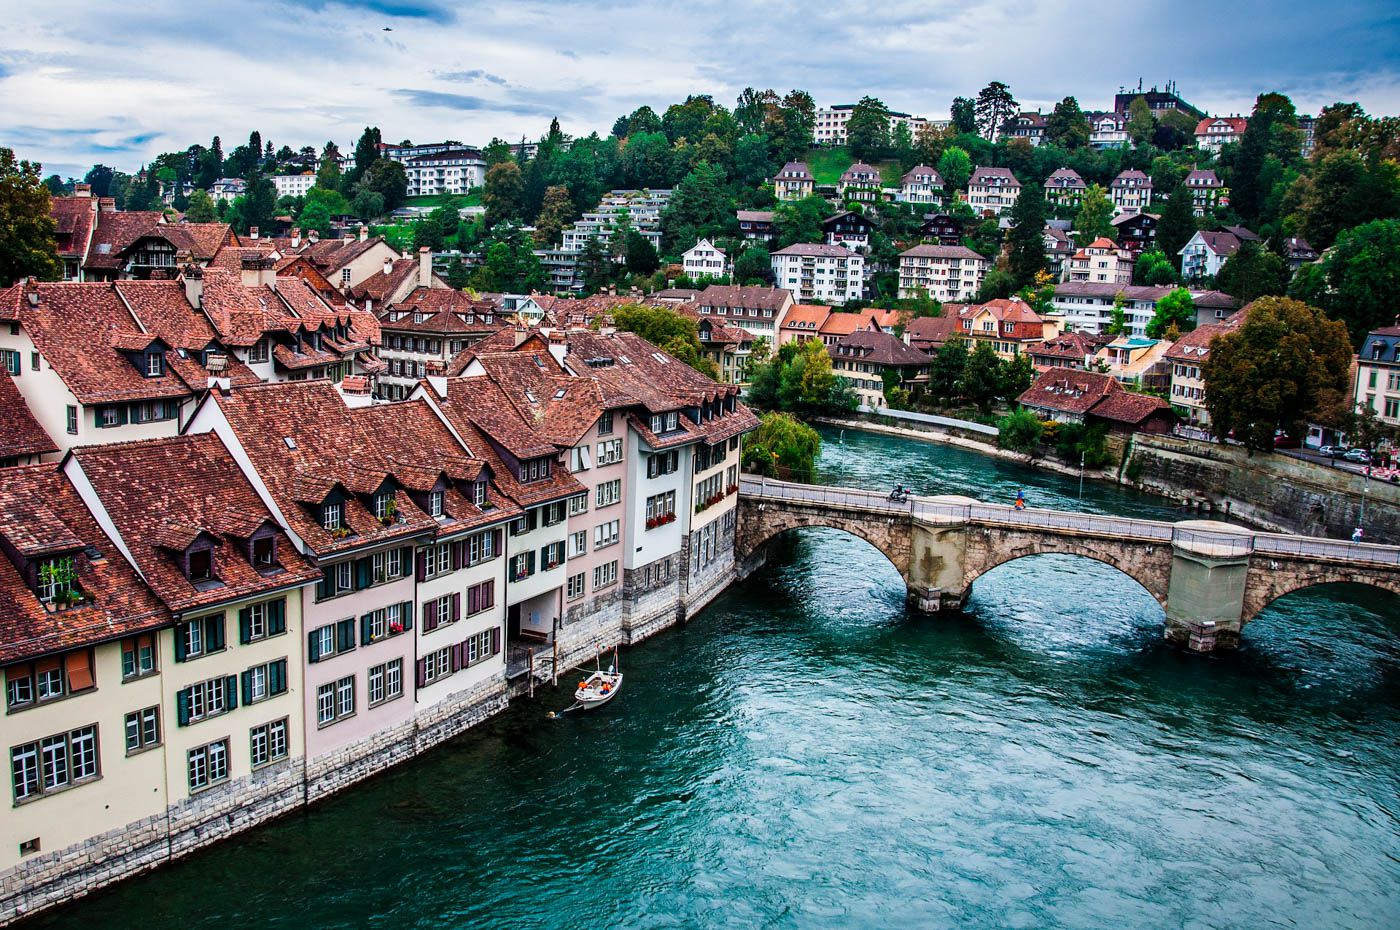 Switzerland Travel Cost - Average Price of a Vacation to Switzerland